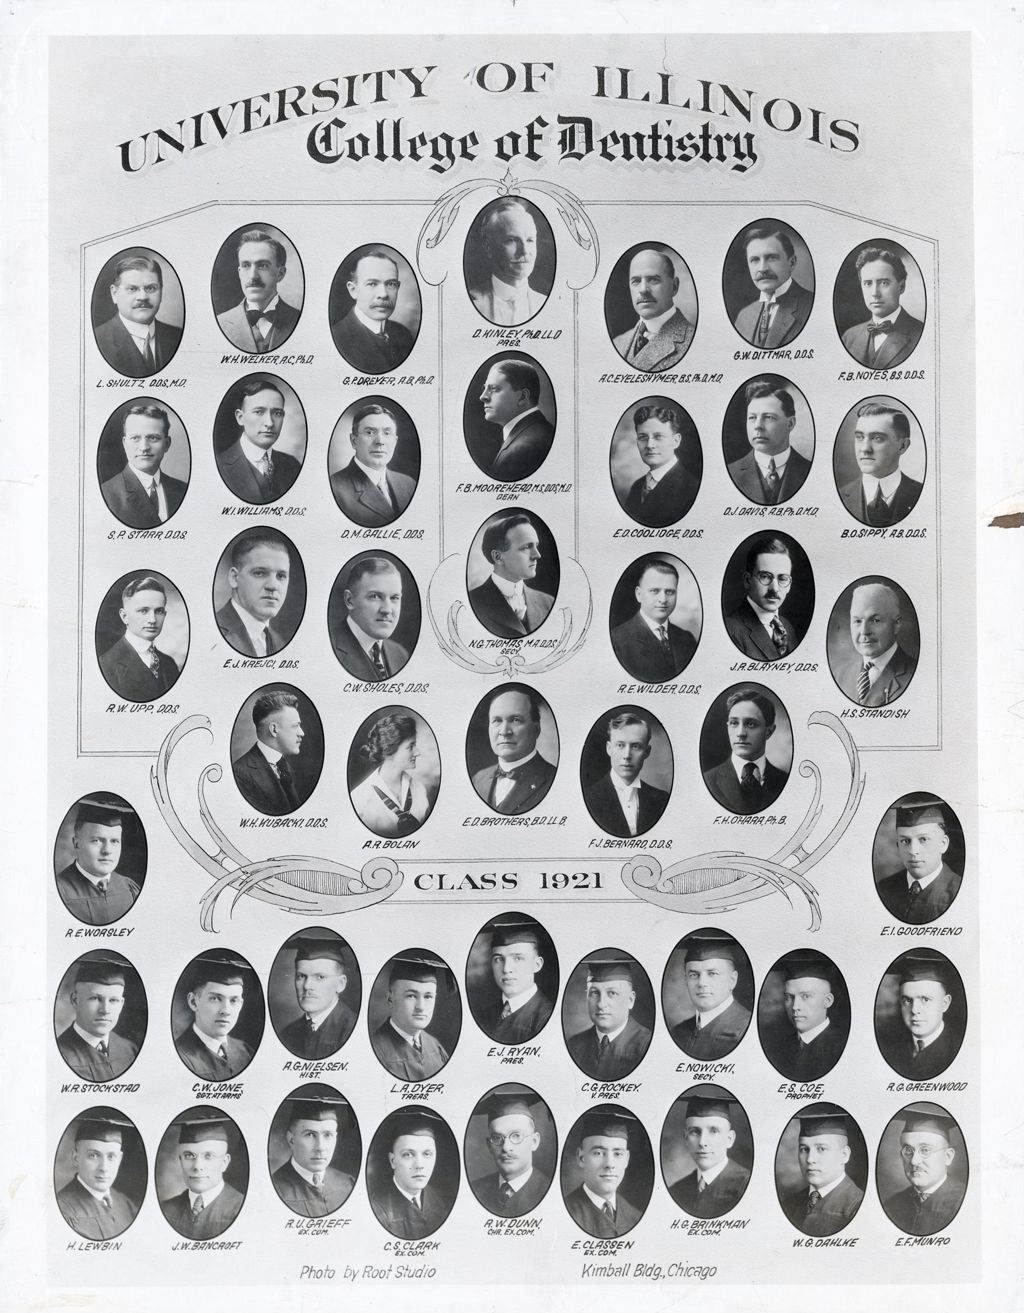 Miniature of 1921 graduating class, University of Illinois College of Dentistry